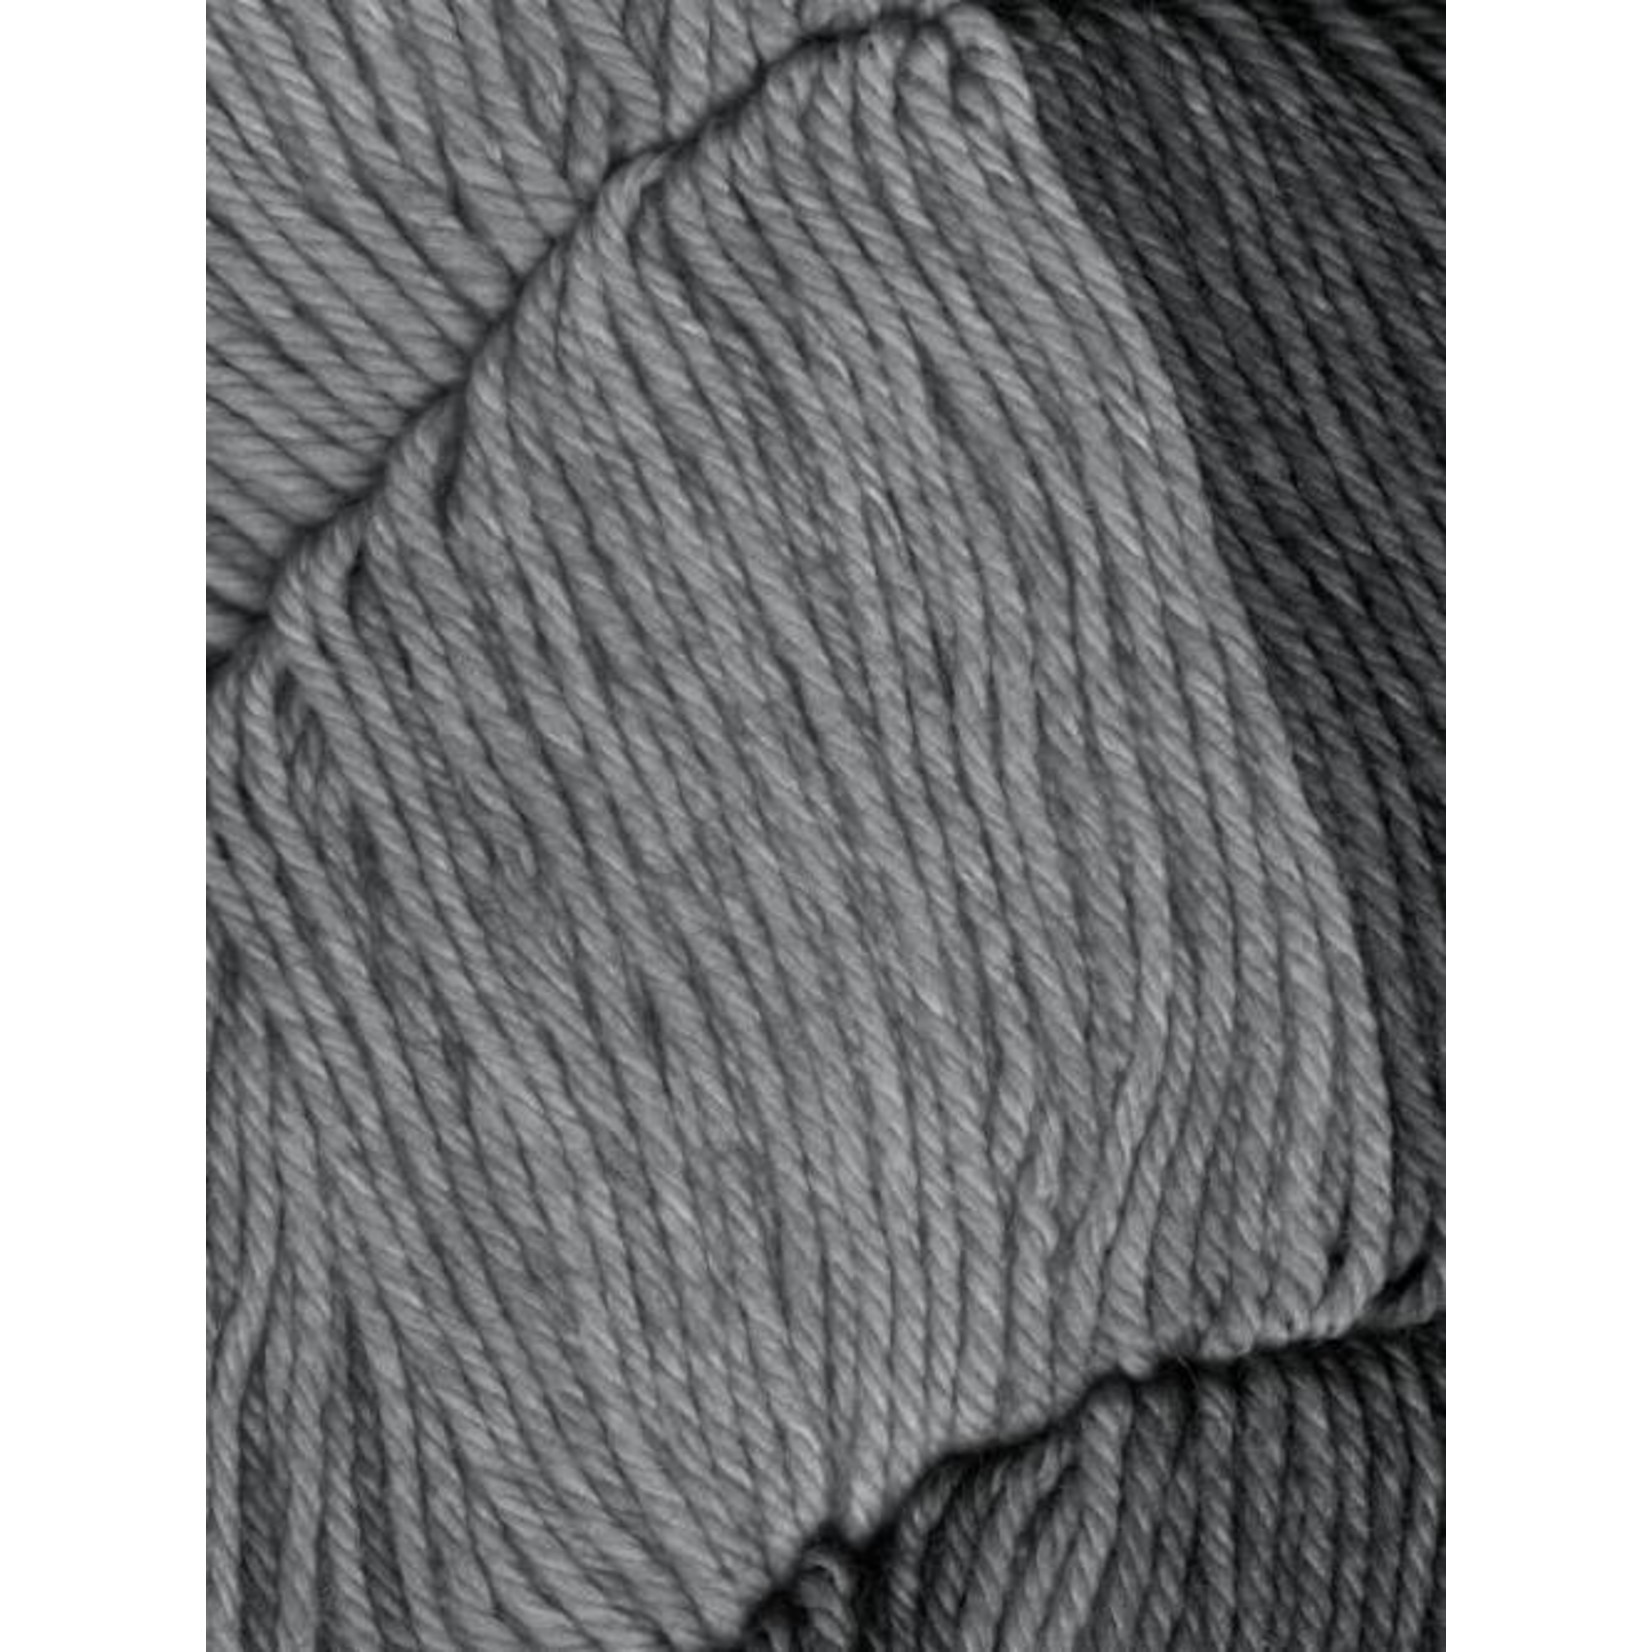 Araucania Huasco Sock KD, 1001, Slate